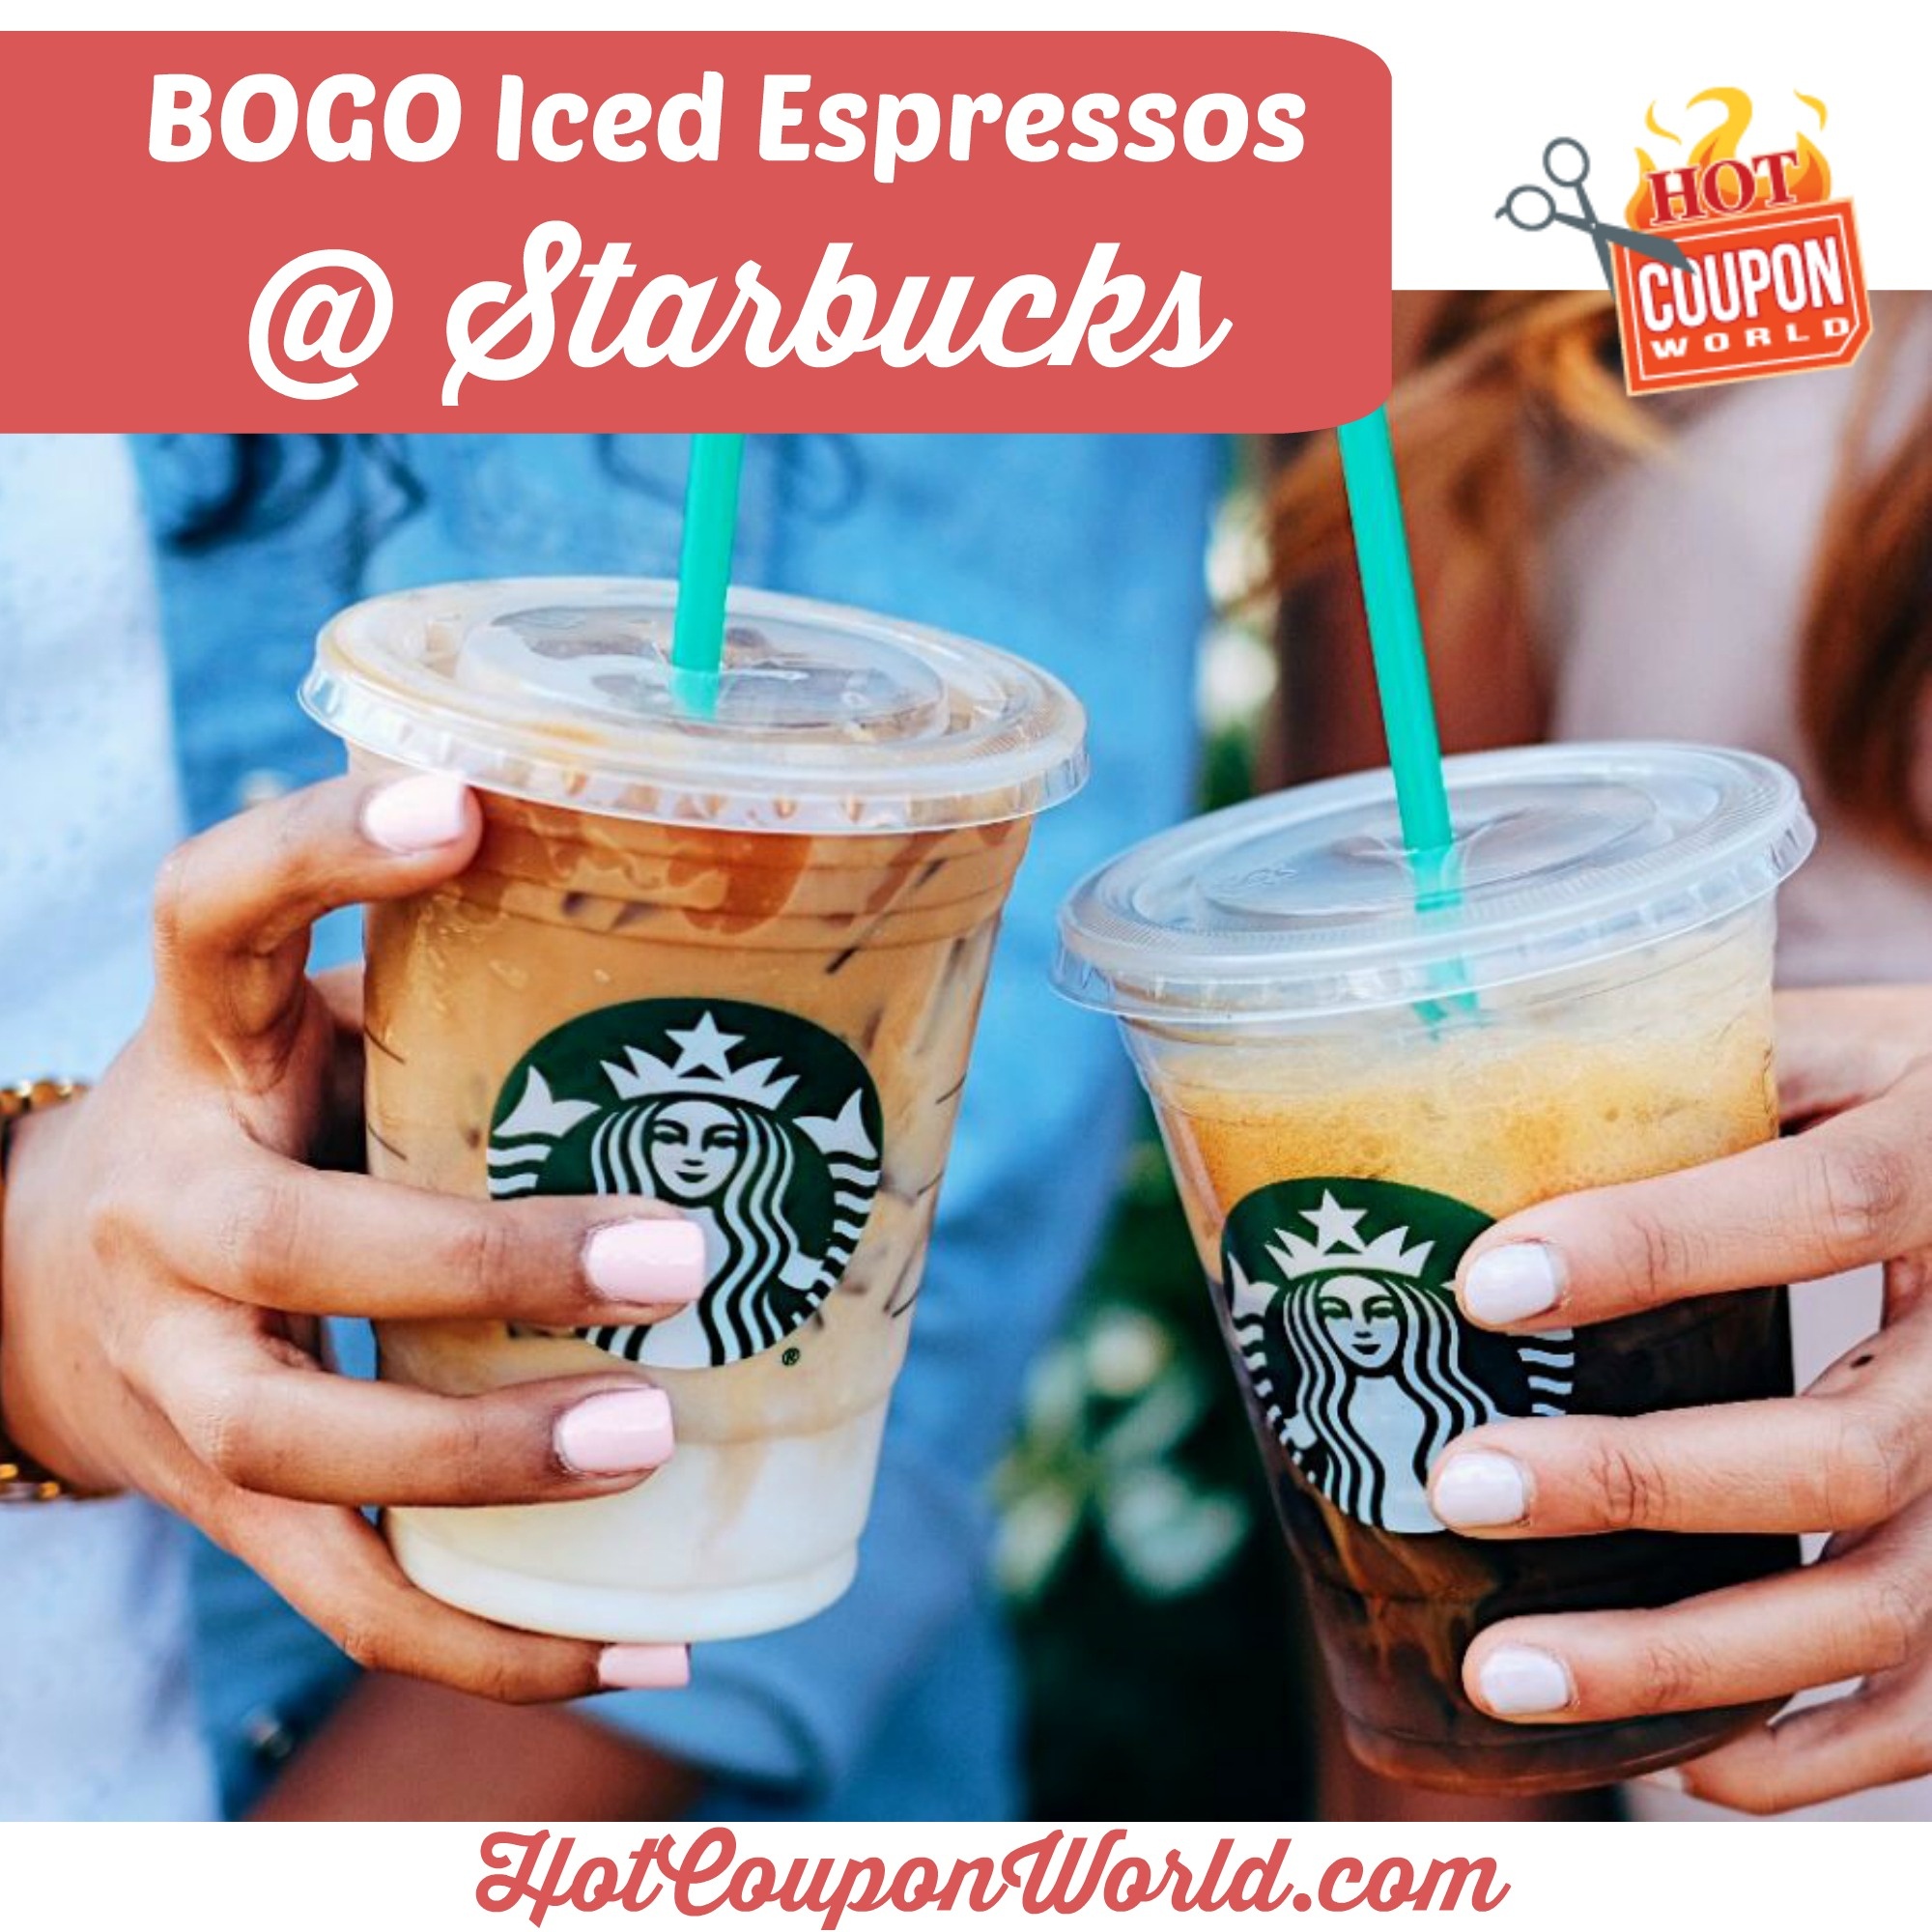 Starbucks Grande Iced Espresso: Bogo Free Event | Hot Coupon World - Free Starbucks Coupon Printable